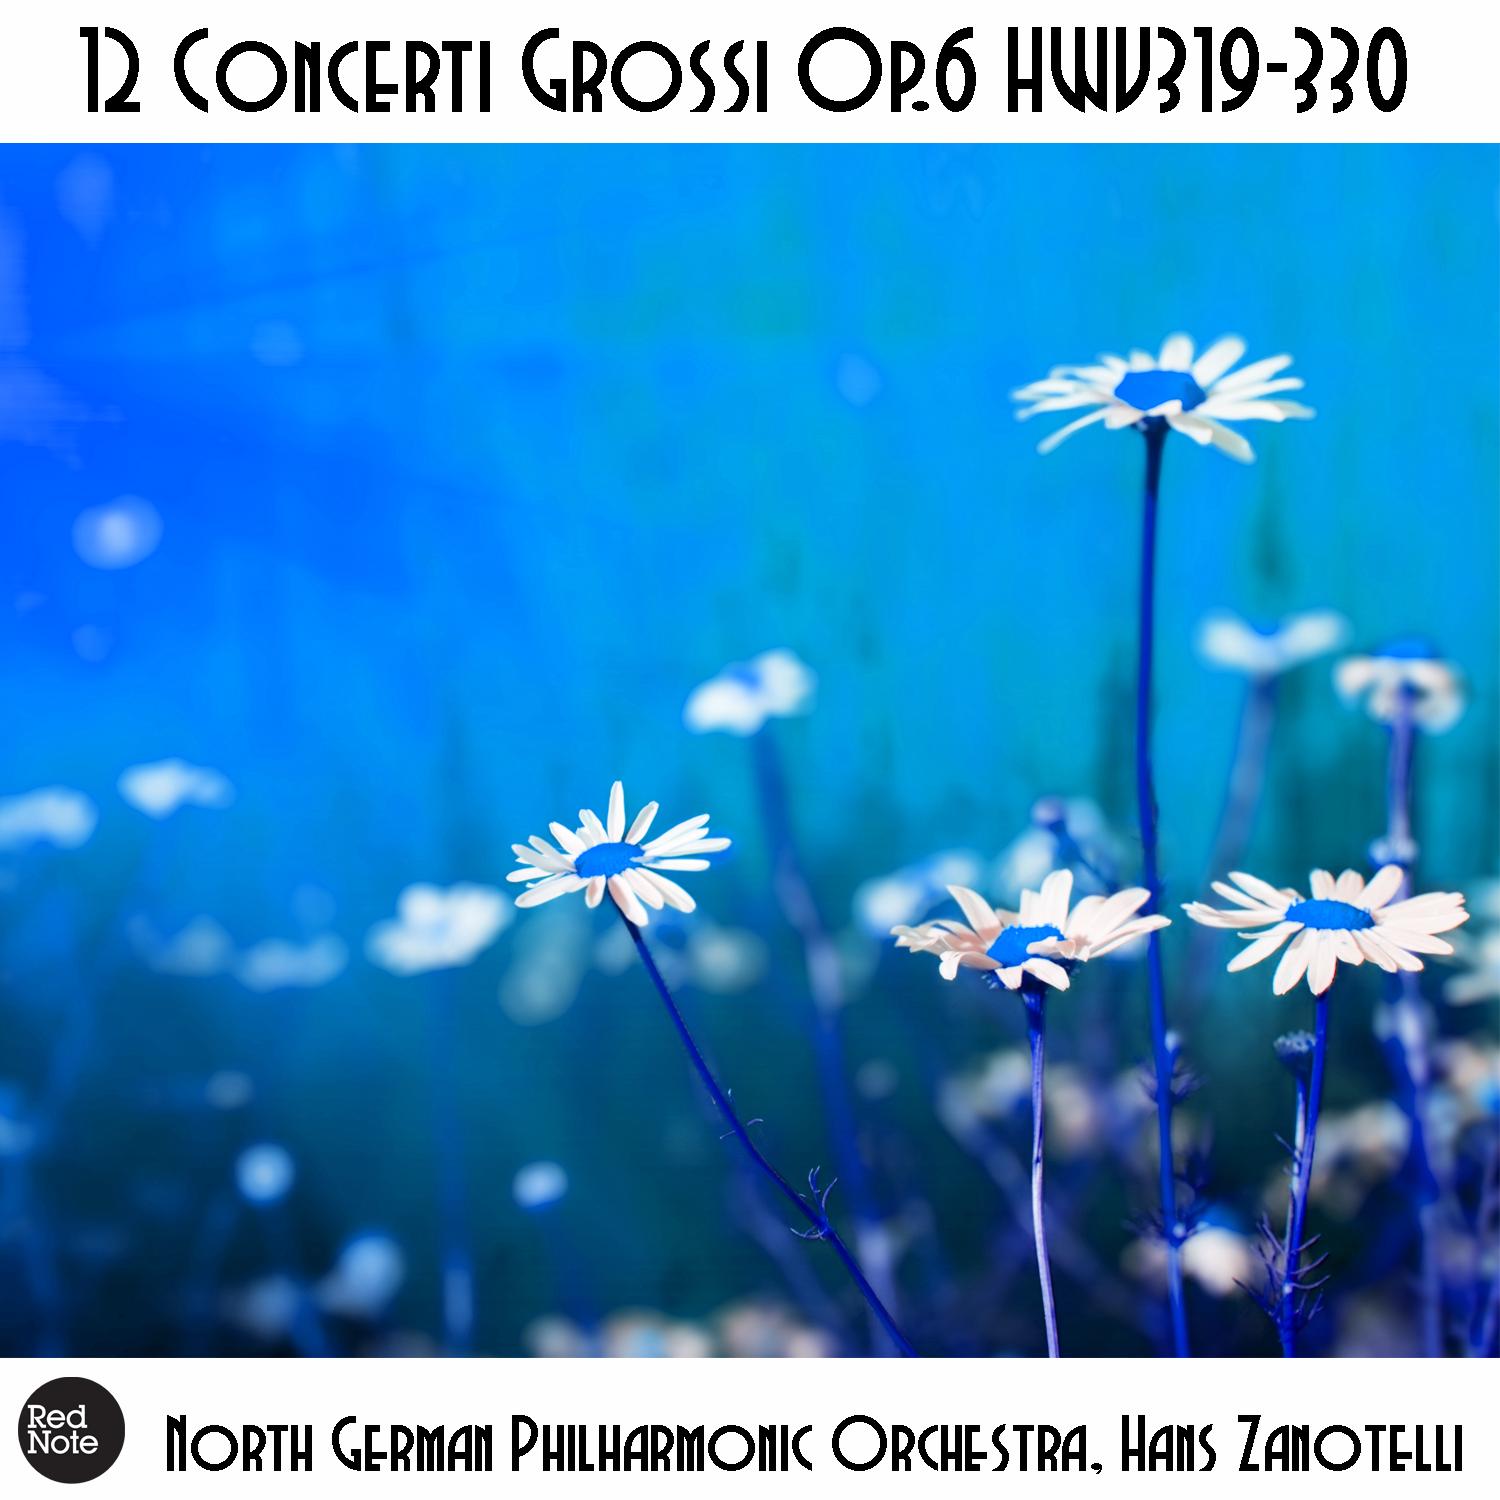 Concerti Grossi No. 6, Op. 6 HWV324: IV. Allegro